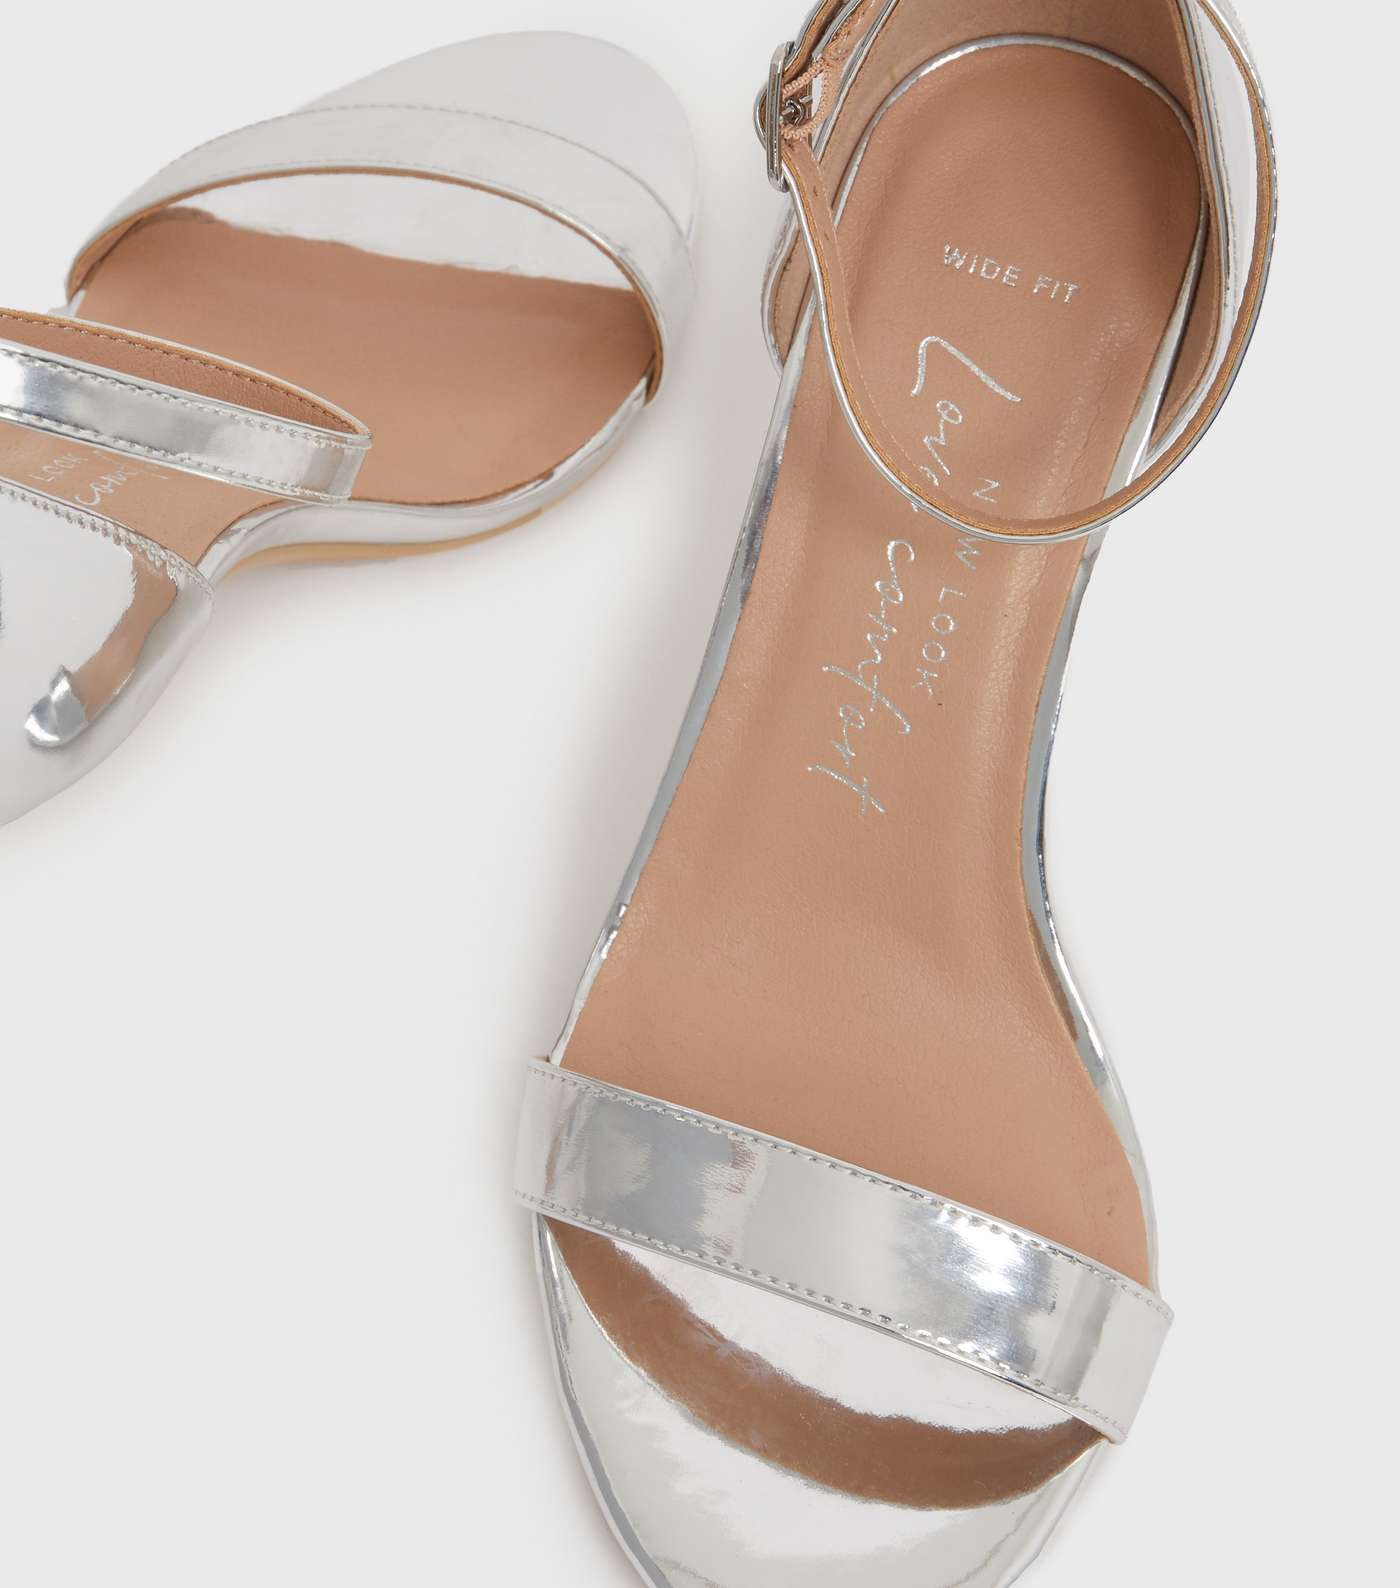 Wide Fit Silver Stiletto Heel Sandals Image 3